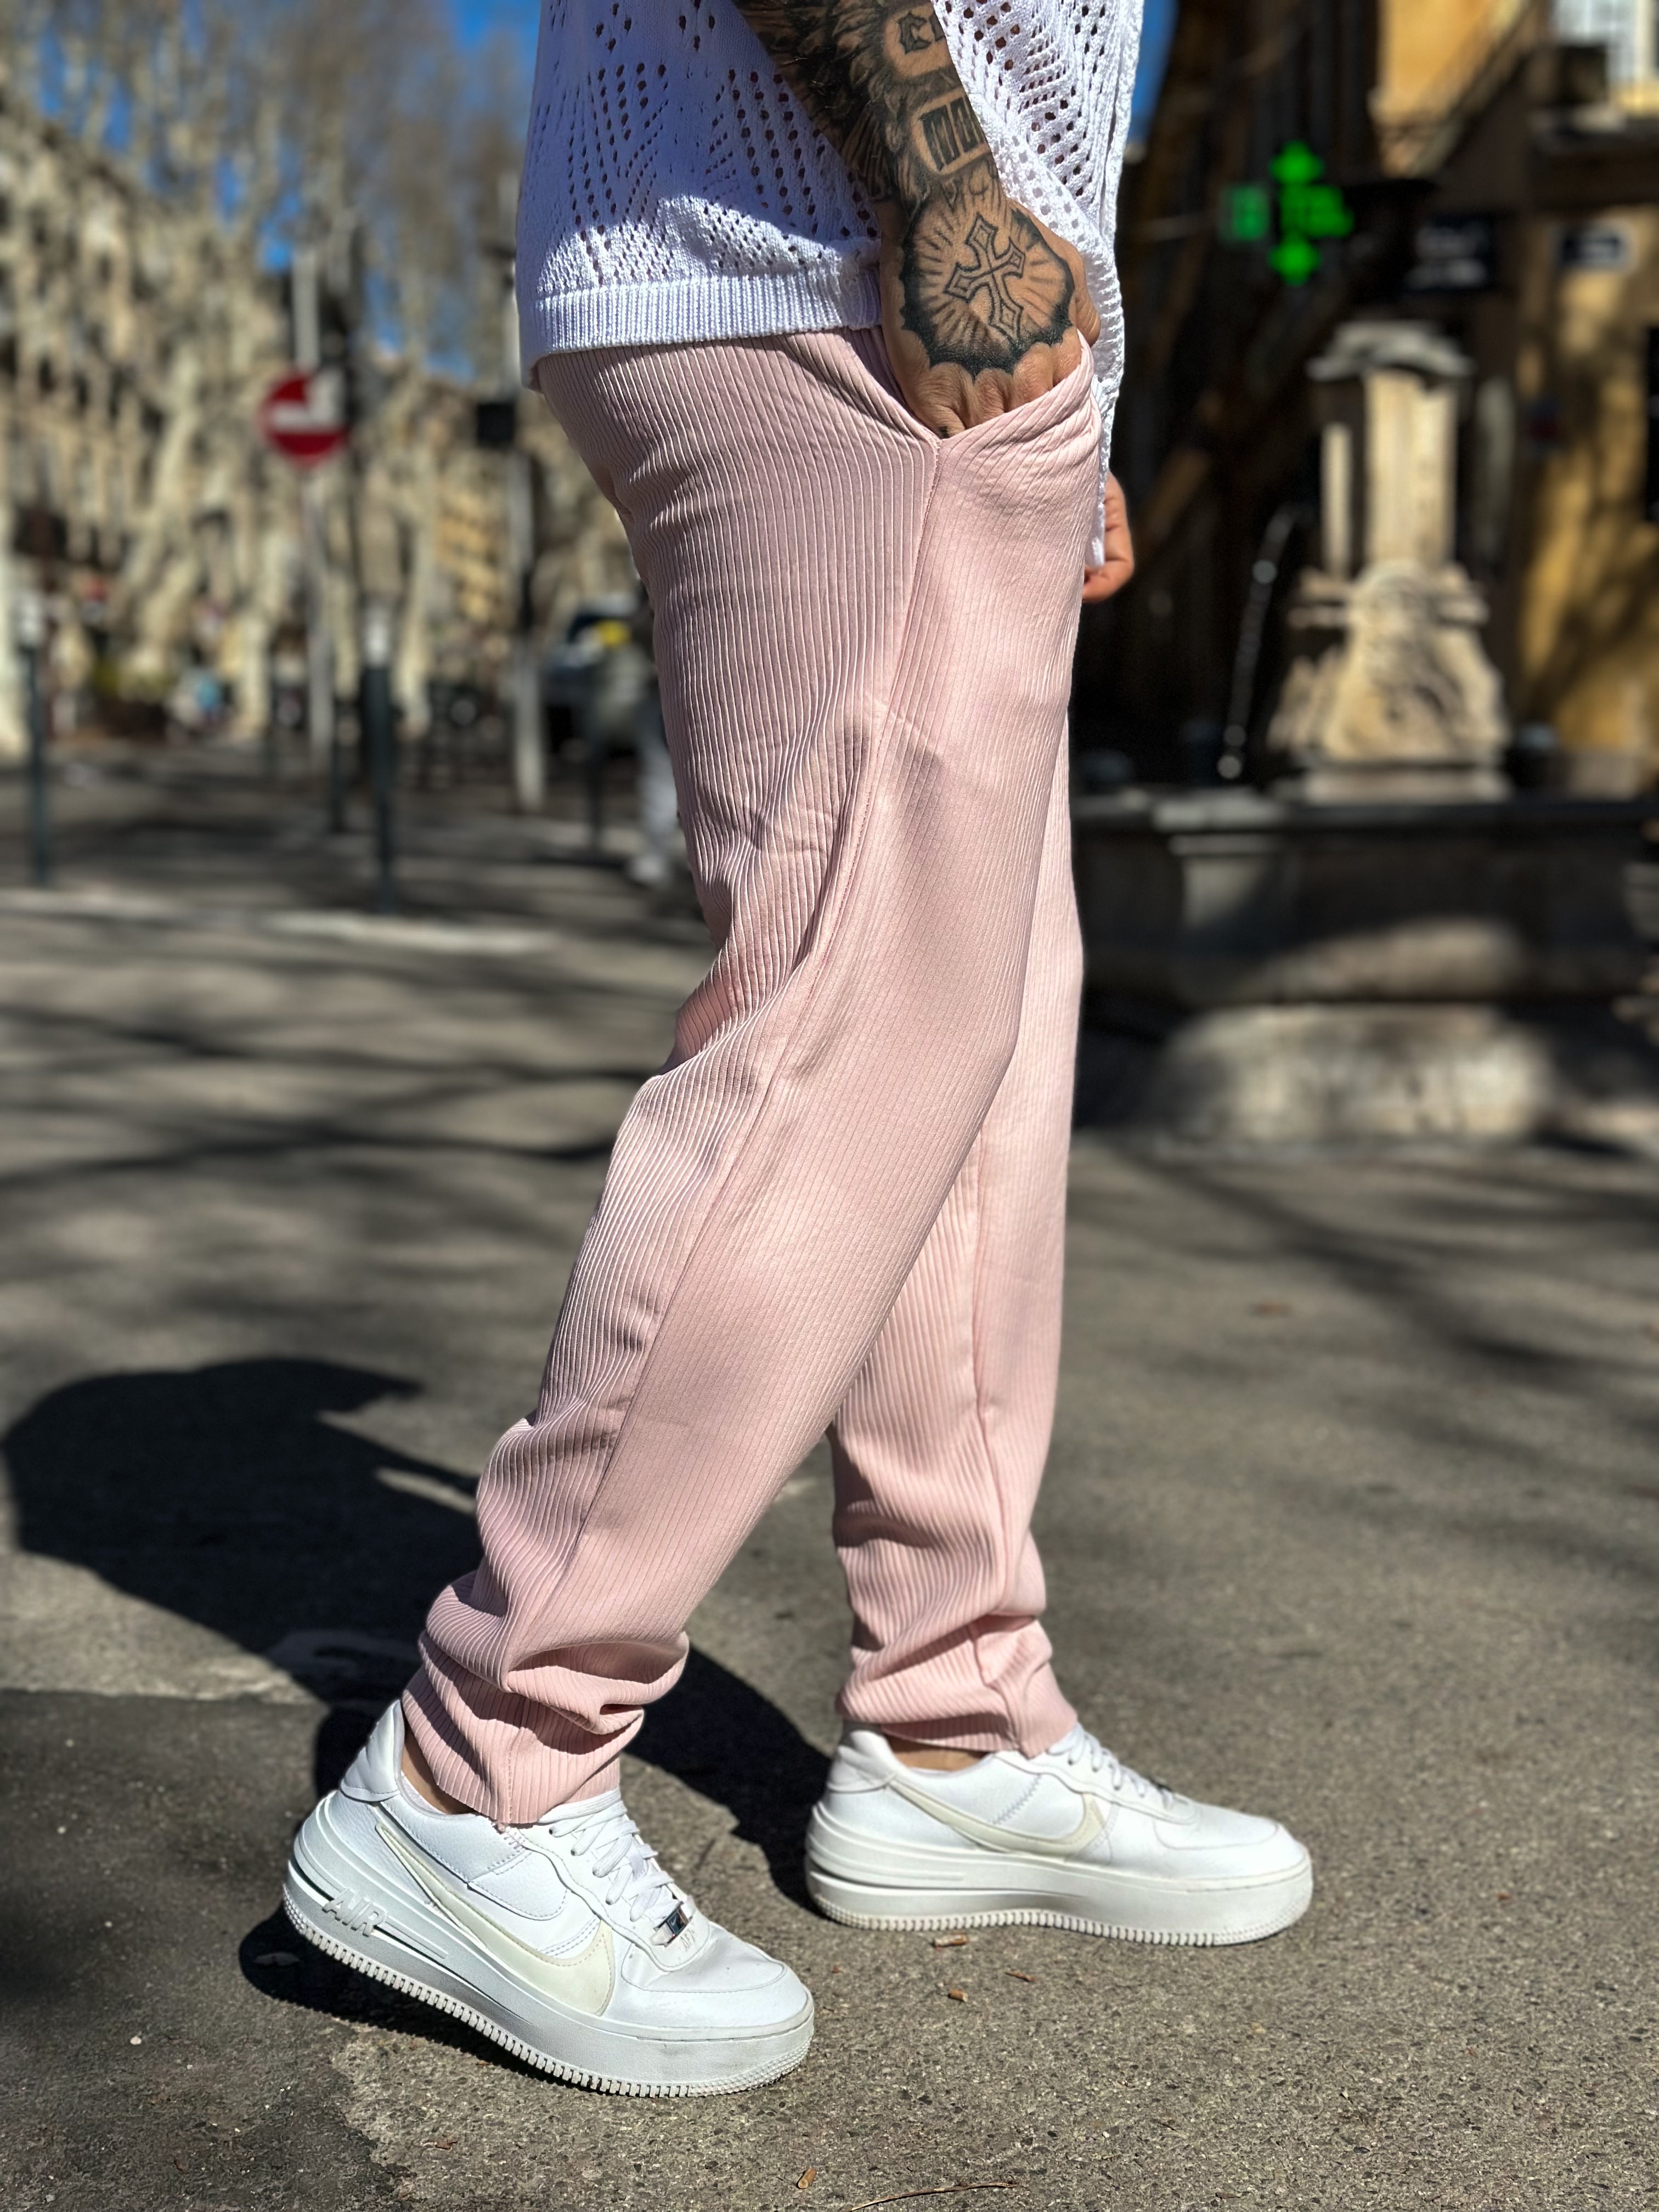 Textured pink Pablo pants